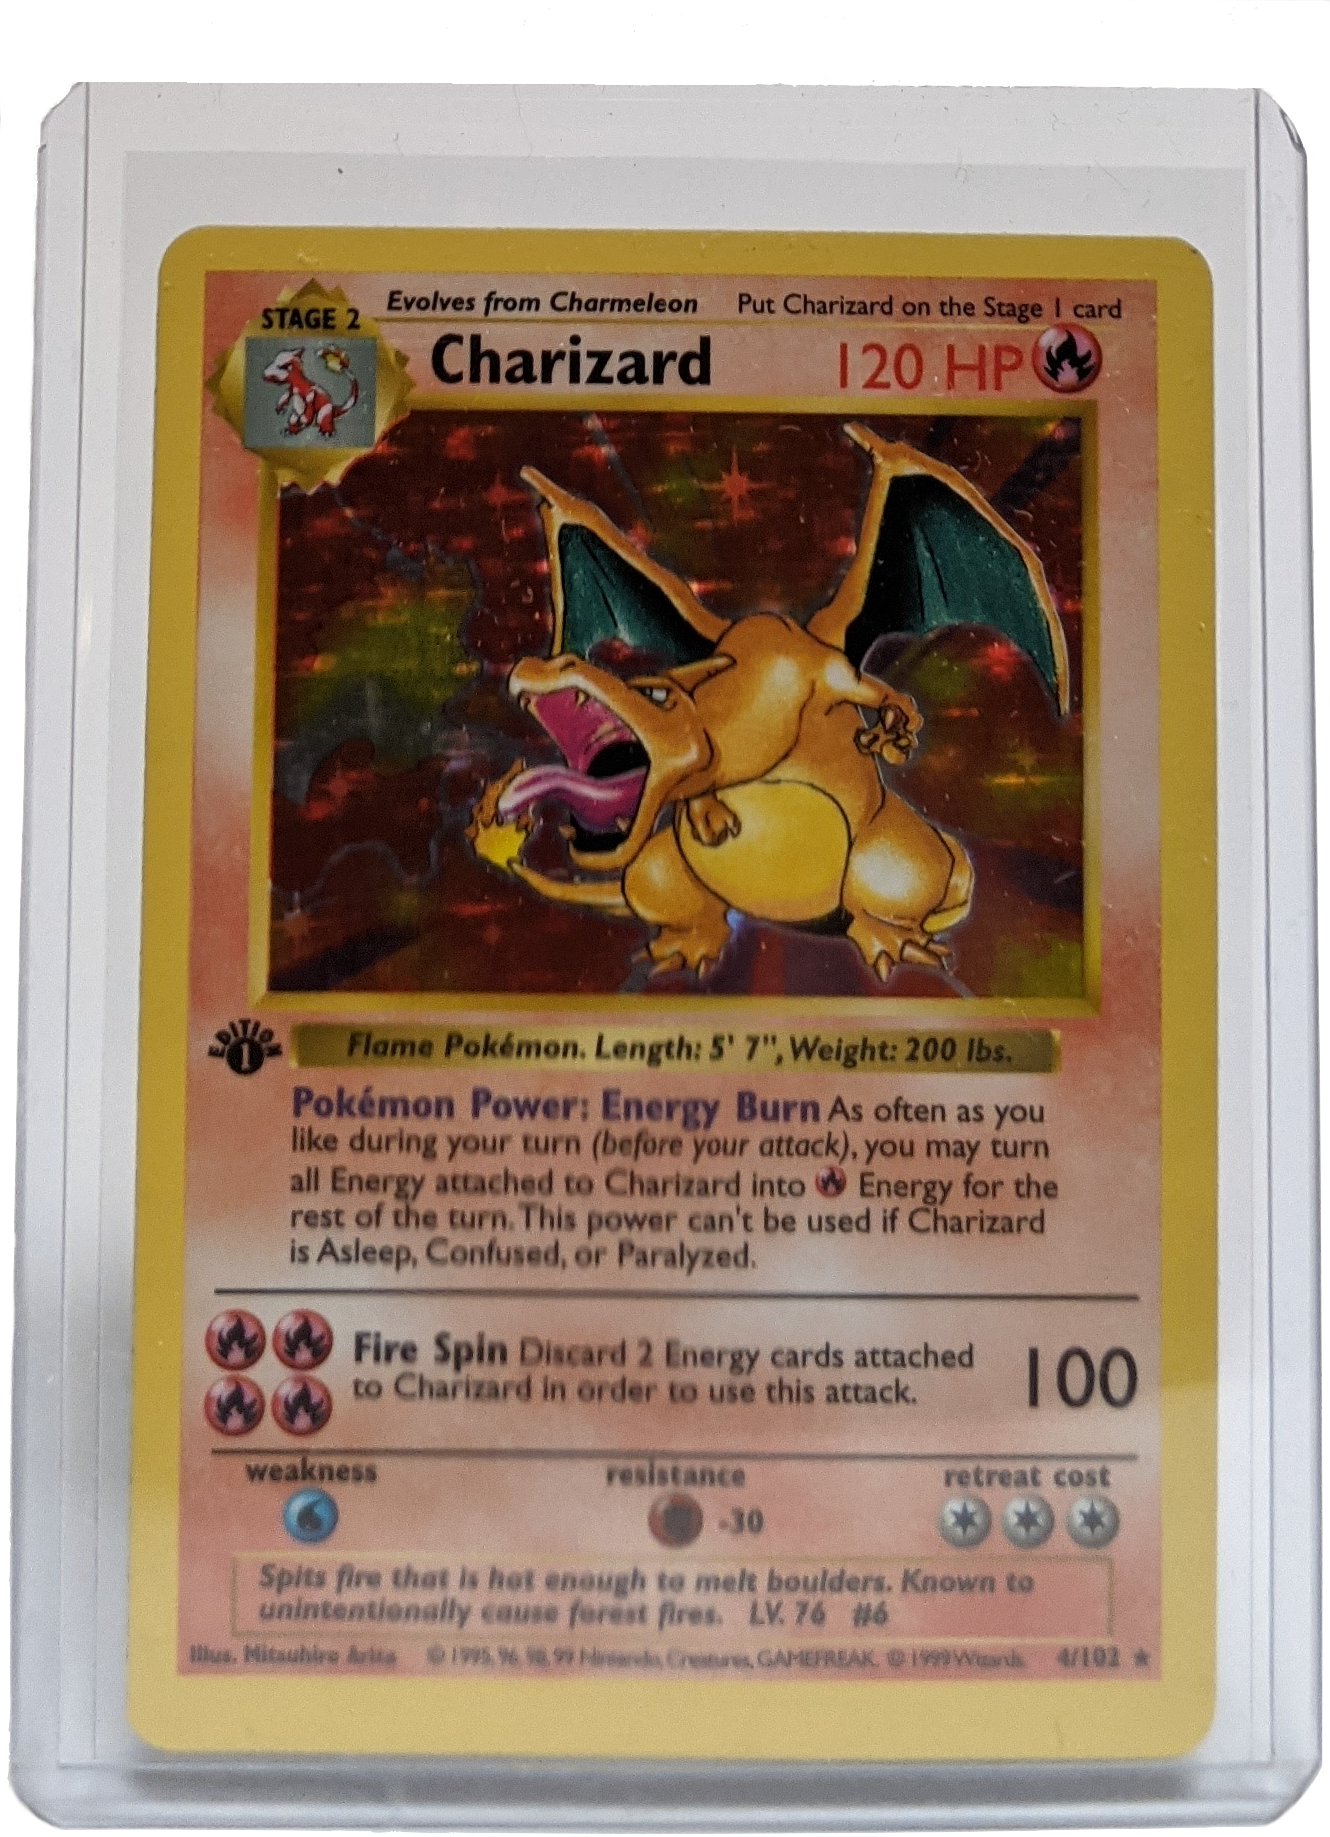 1999 Pokemon Charizard - 1st Edition Shadowless